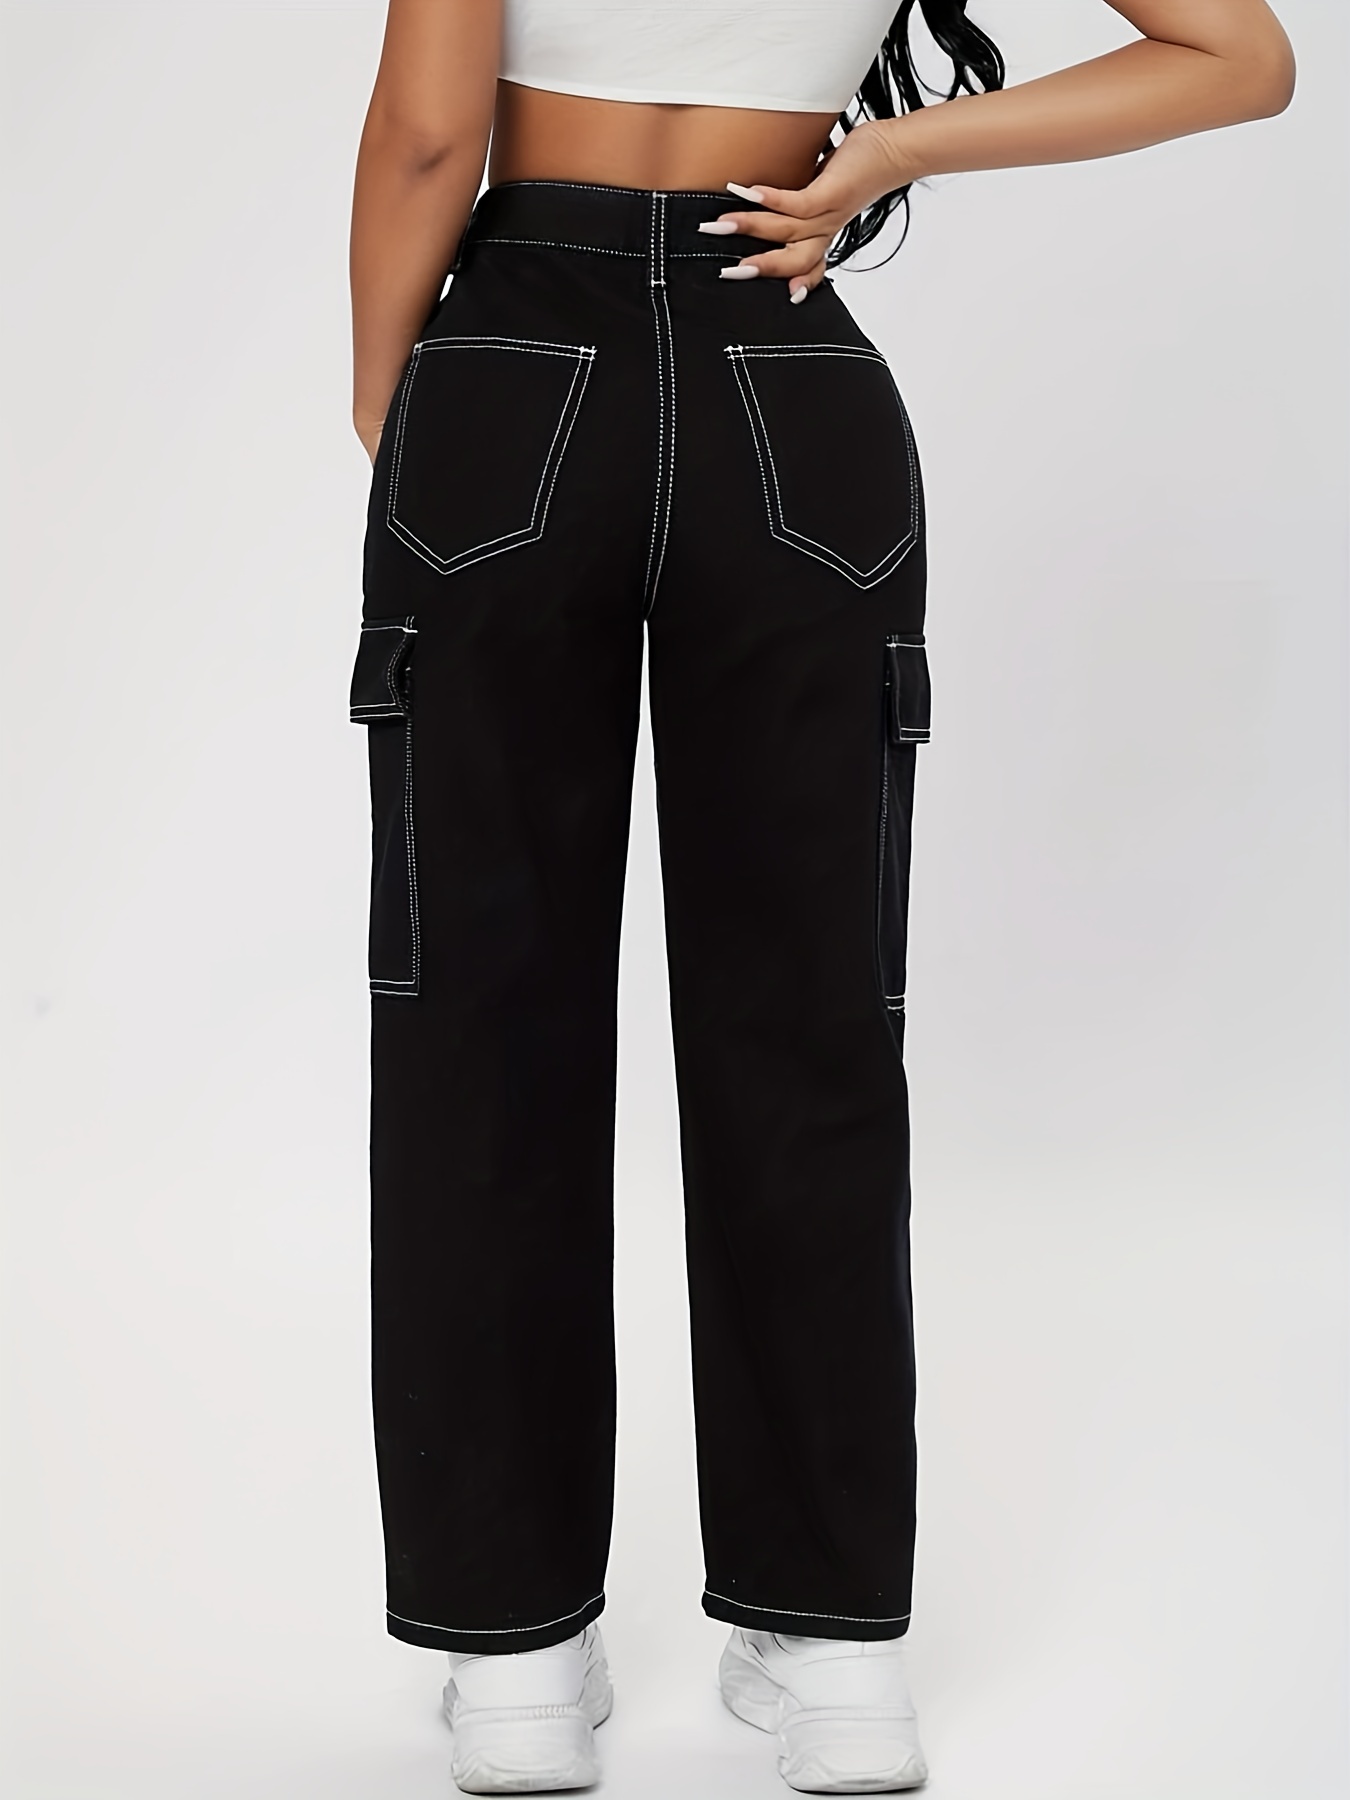 Fashion (Black)Multi Pockets White Cargo Pants Women Adjustable